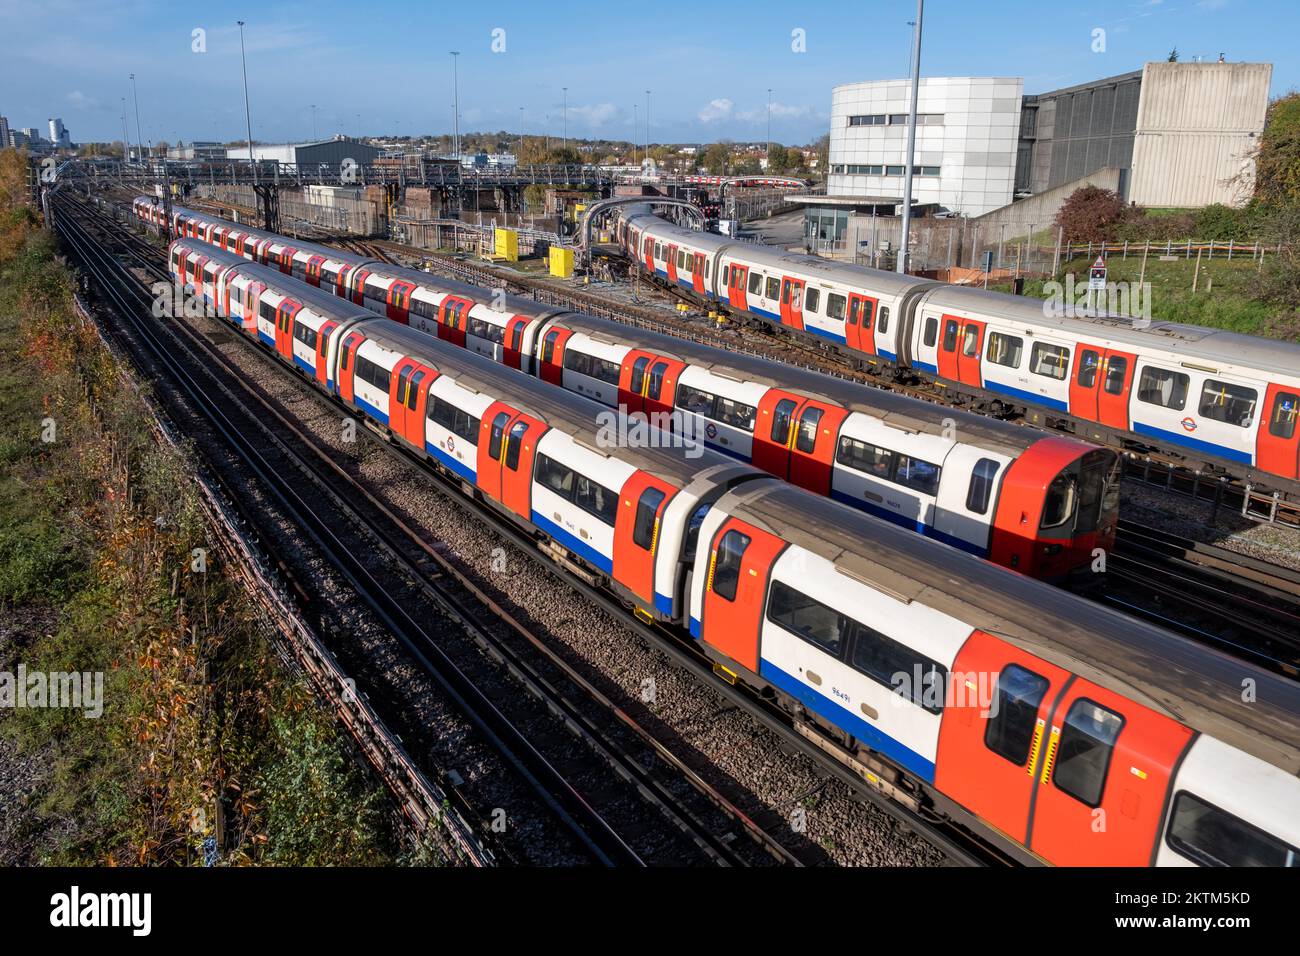 Three London tube trains pass each other at Neasden London Underground Train Depot - Jubilee Line, North West London, England, UK. Stock Photo